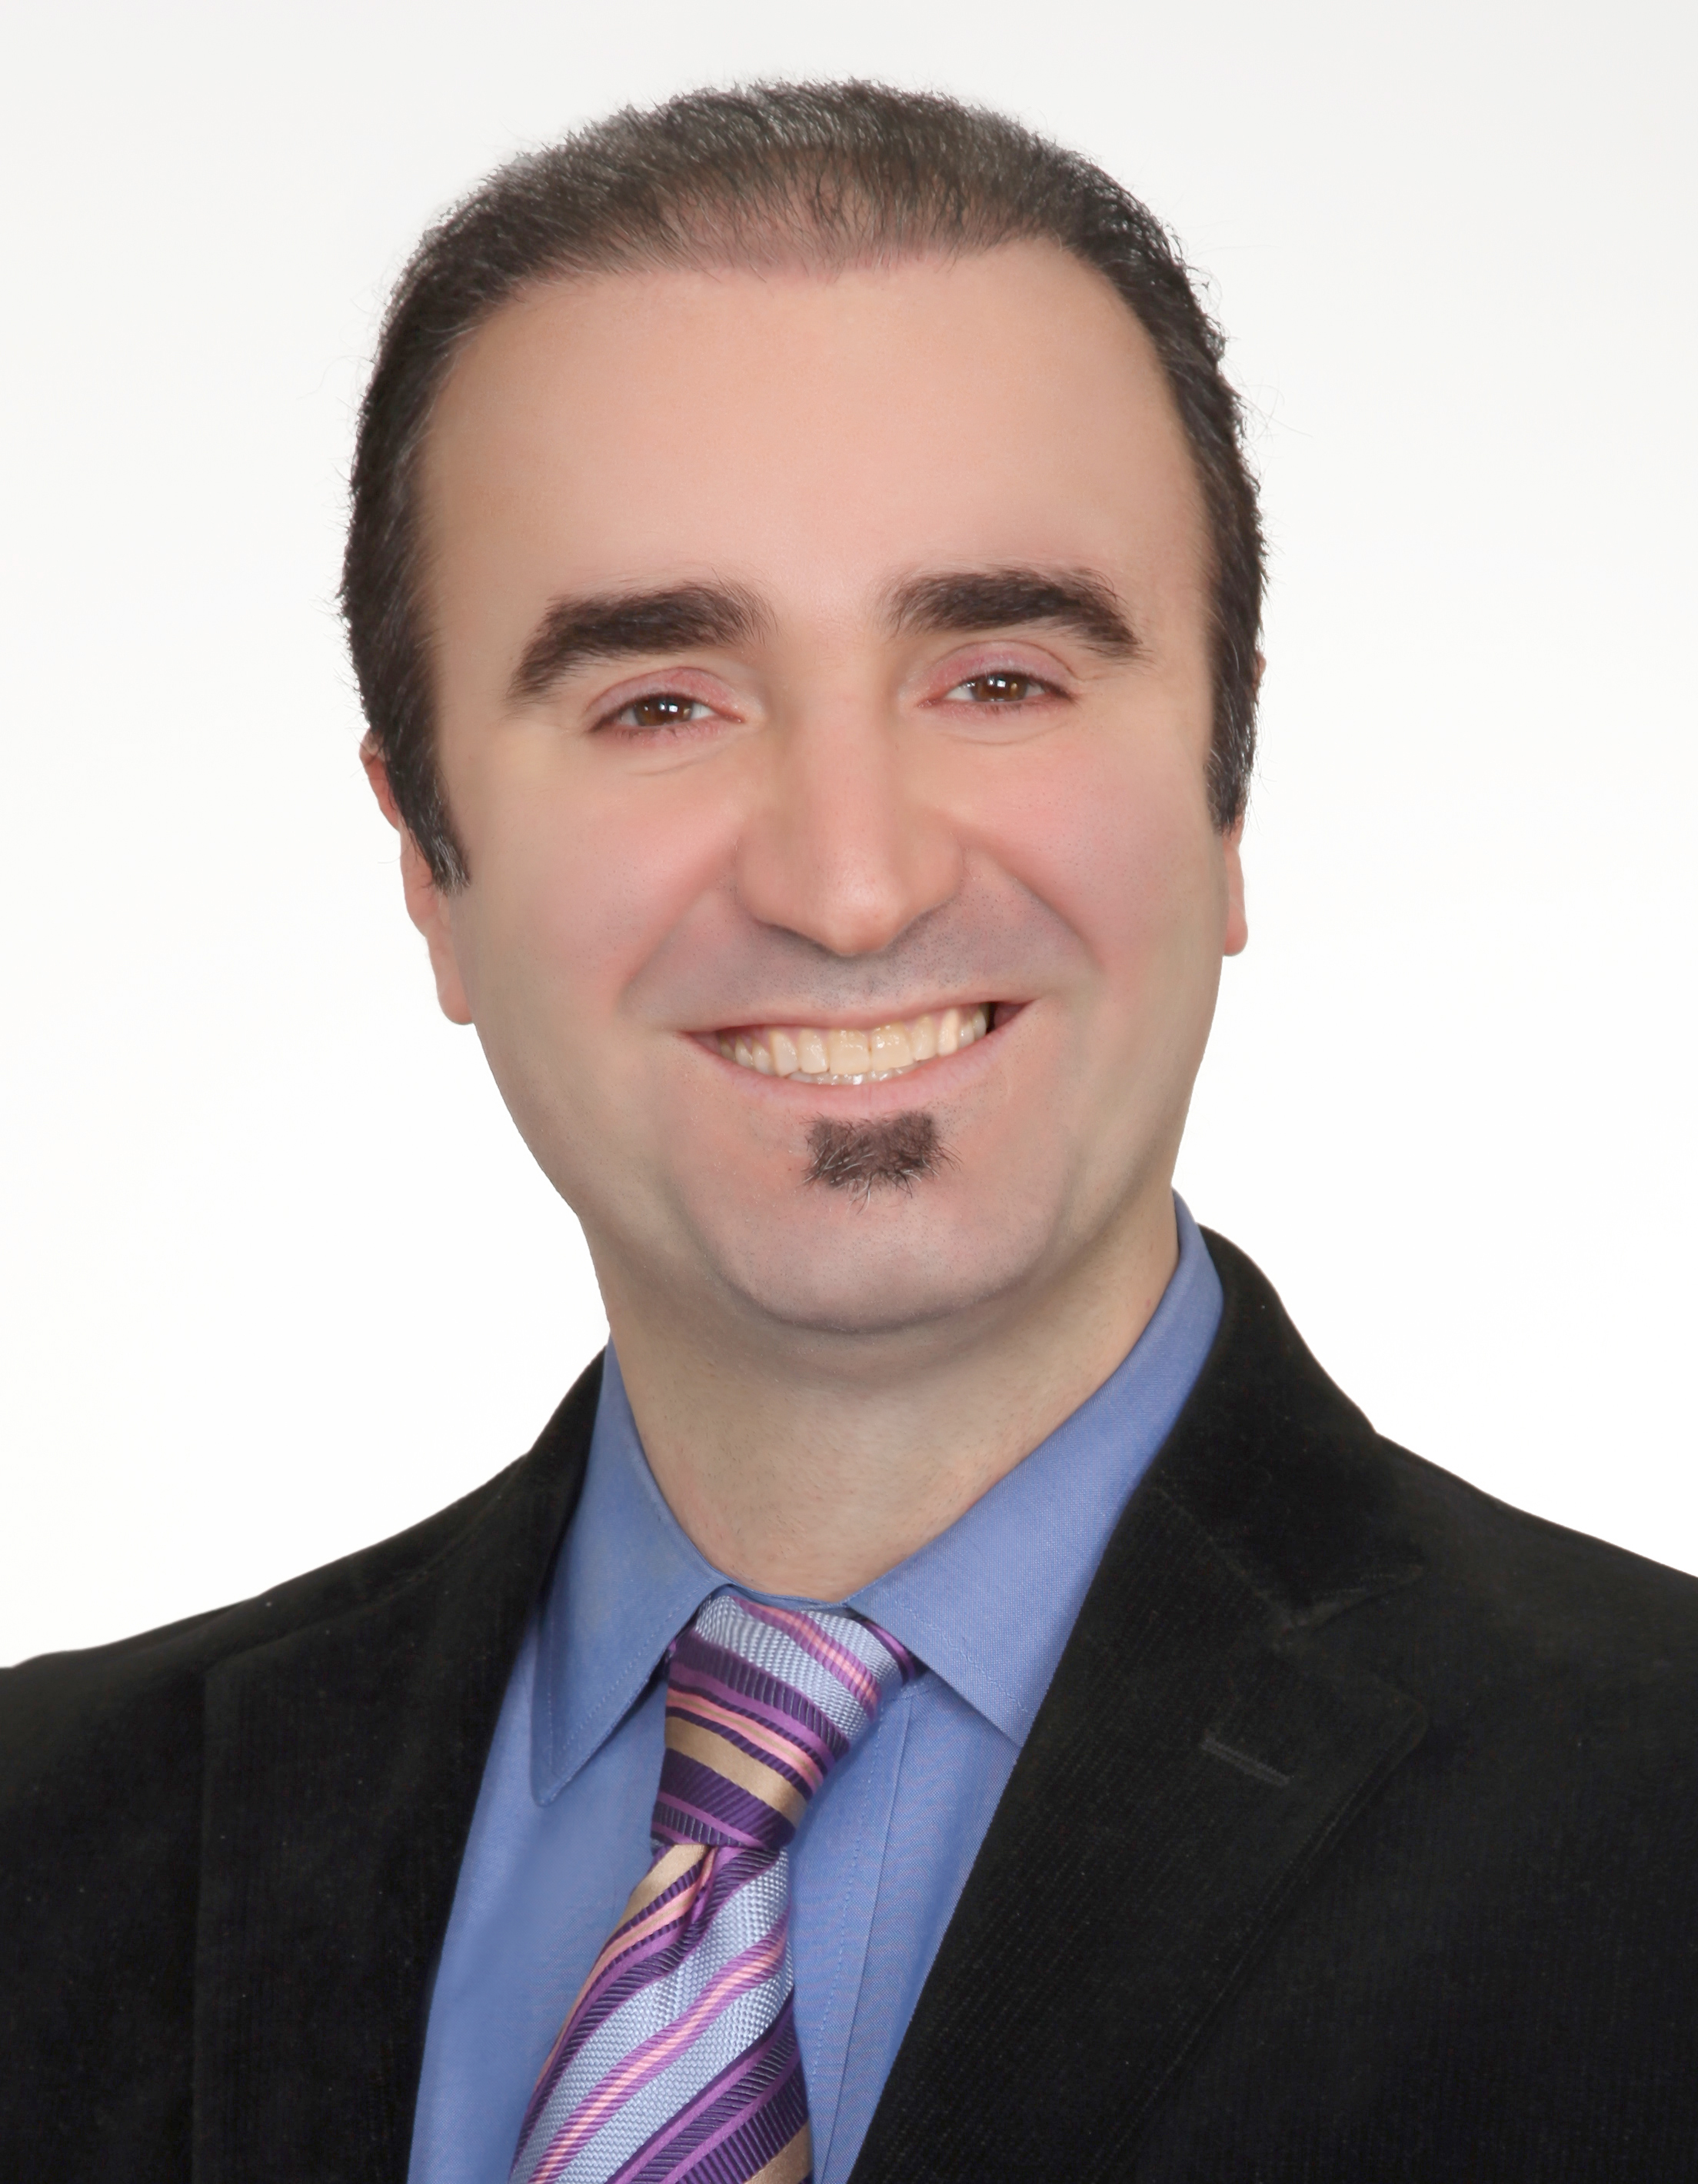 Assistant Professor Saeid Amini-Nik